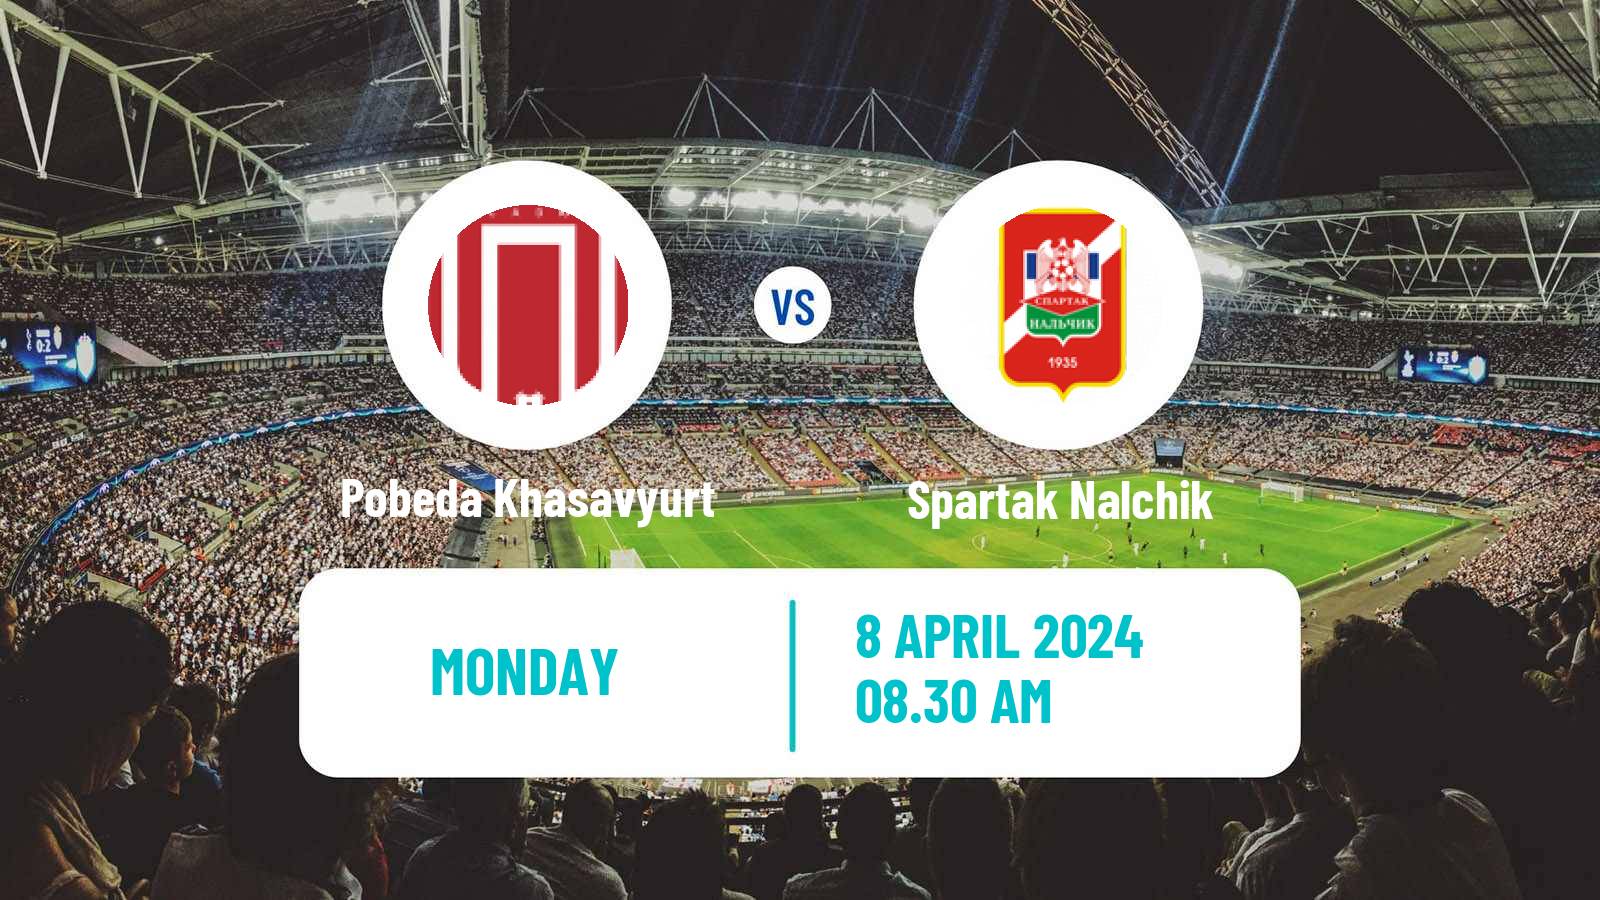 Soccer FNL 2 Division B Group 1 Pobeda Khasavyurt - Spartak Nalchik